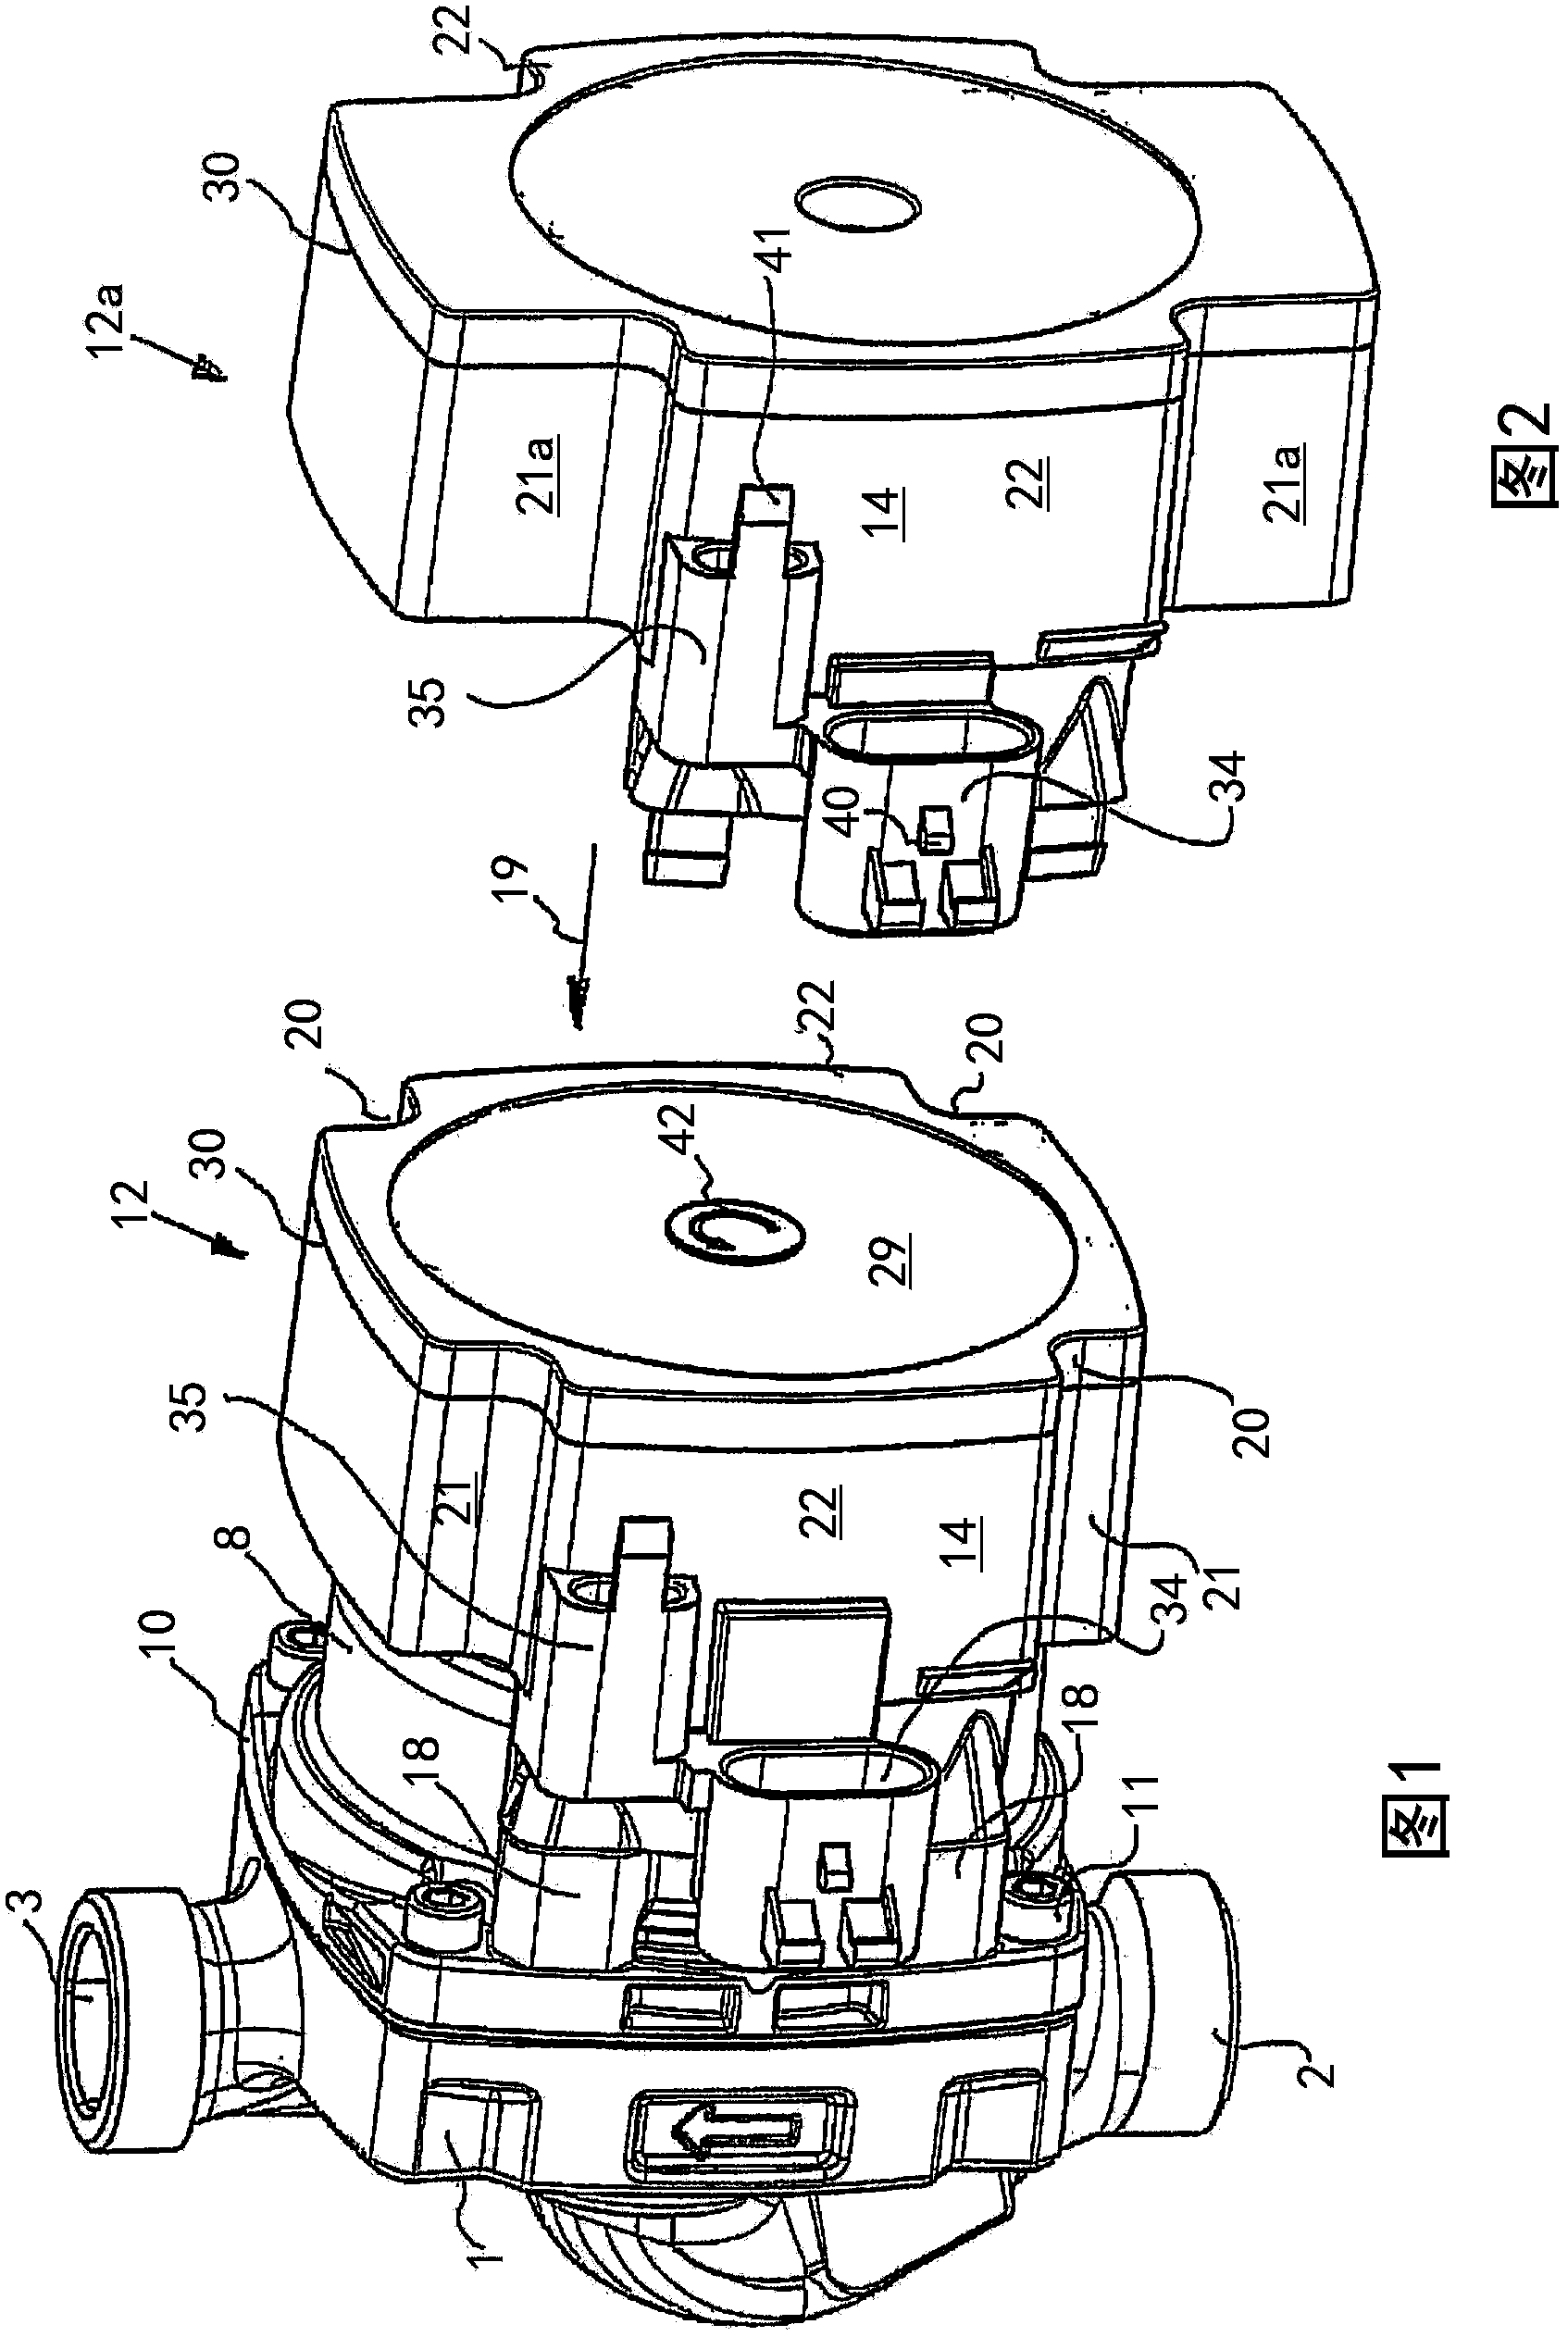 Heating circulating pump